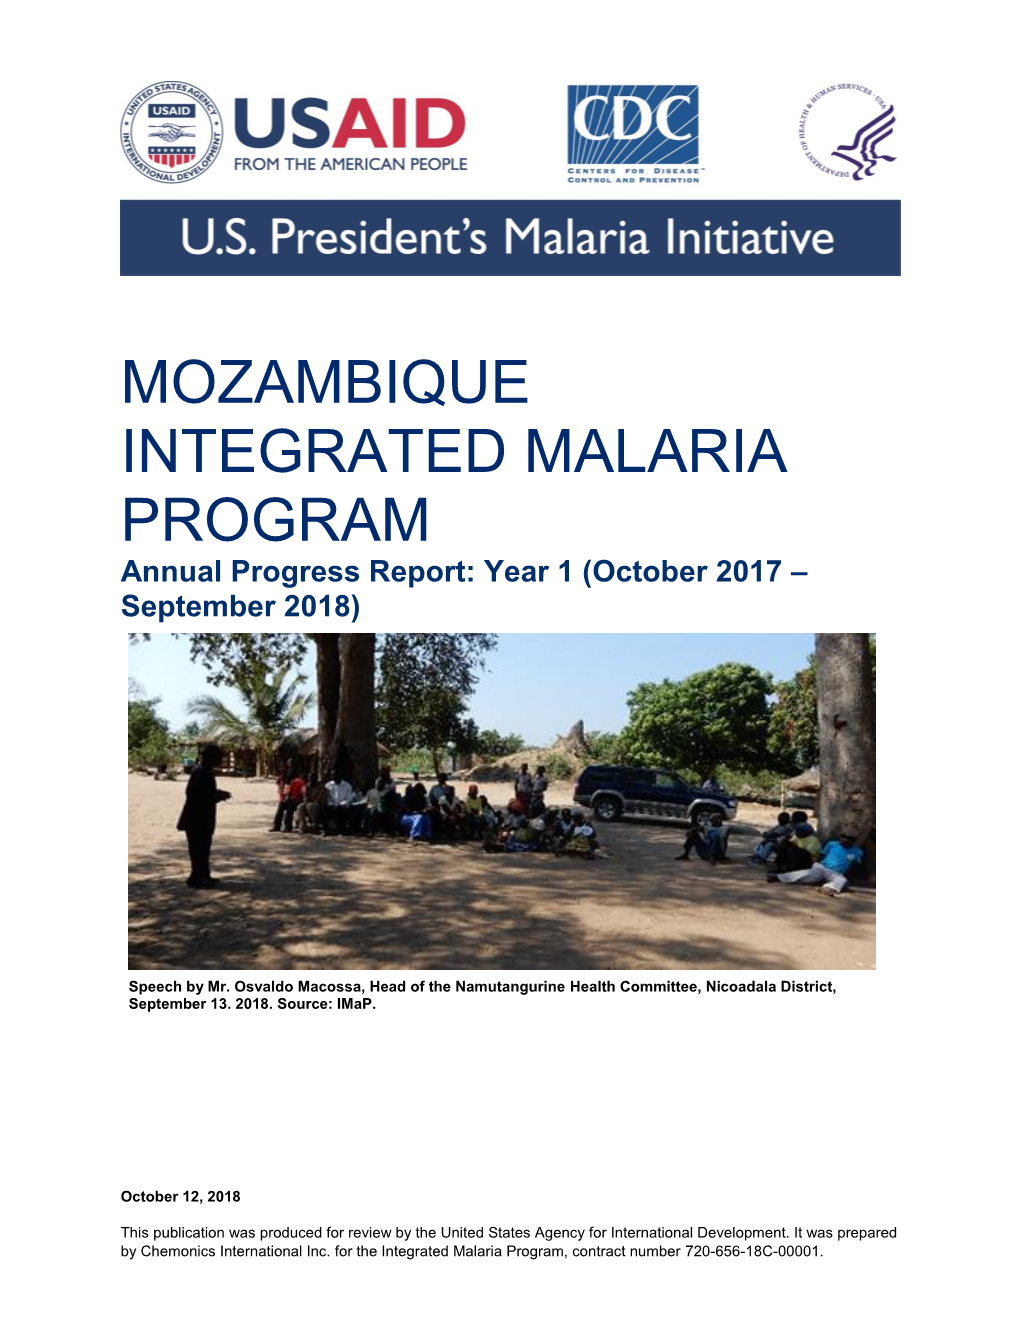 MOZAMBIQUE INTEGRATED MALARIA PROGRAM Annual Progress Report: Year 1 (October 2017 – September 2018)